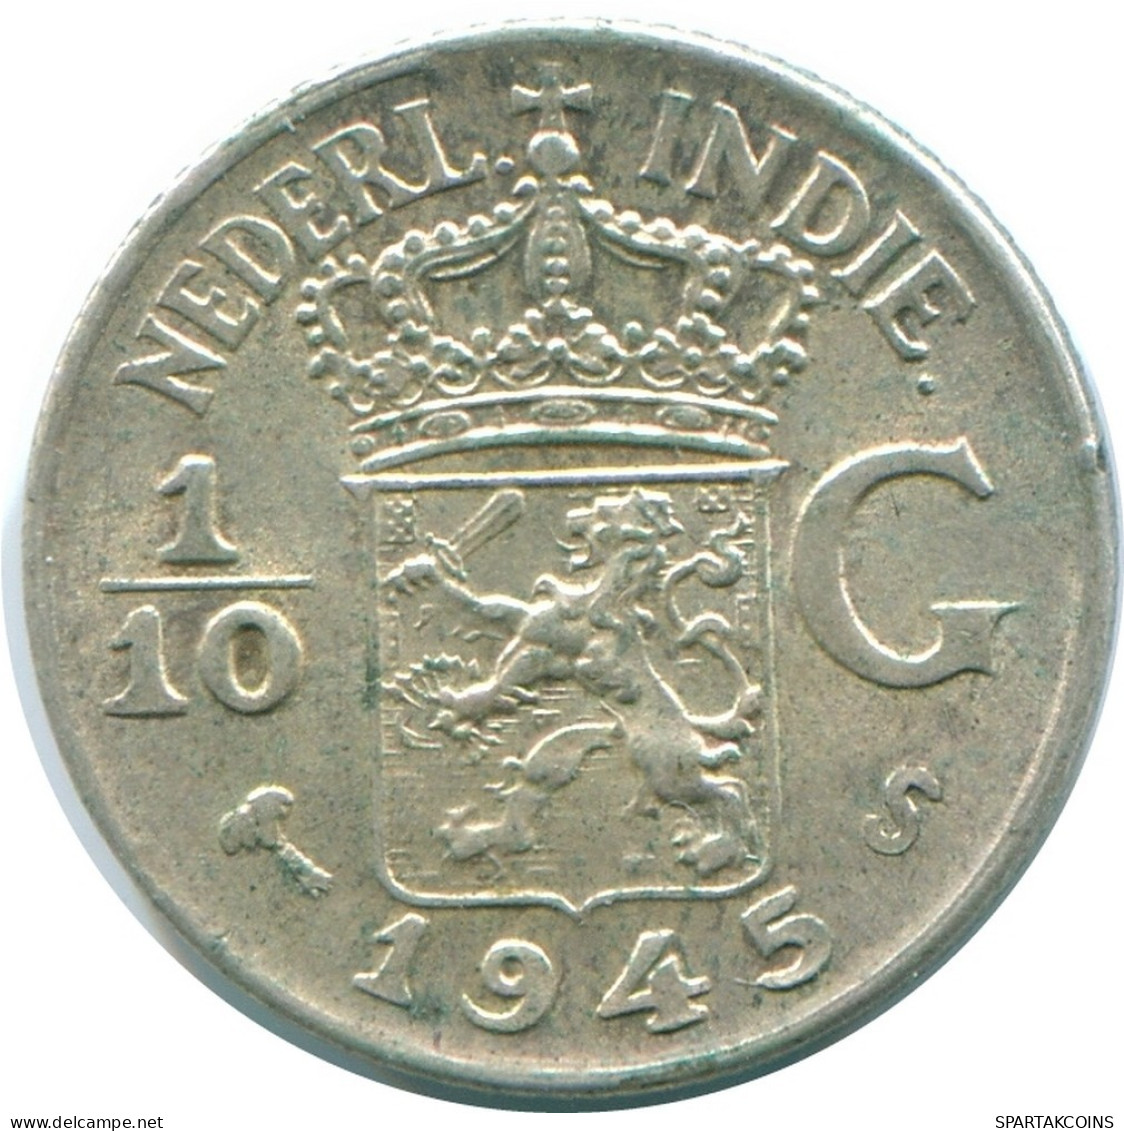 1/10 GULDEN 1945 S INDIAS ORIENTALES DE LOS PAÍSES BAJOS PLATA #NL14182.3.E.A - Dutch East Indies